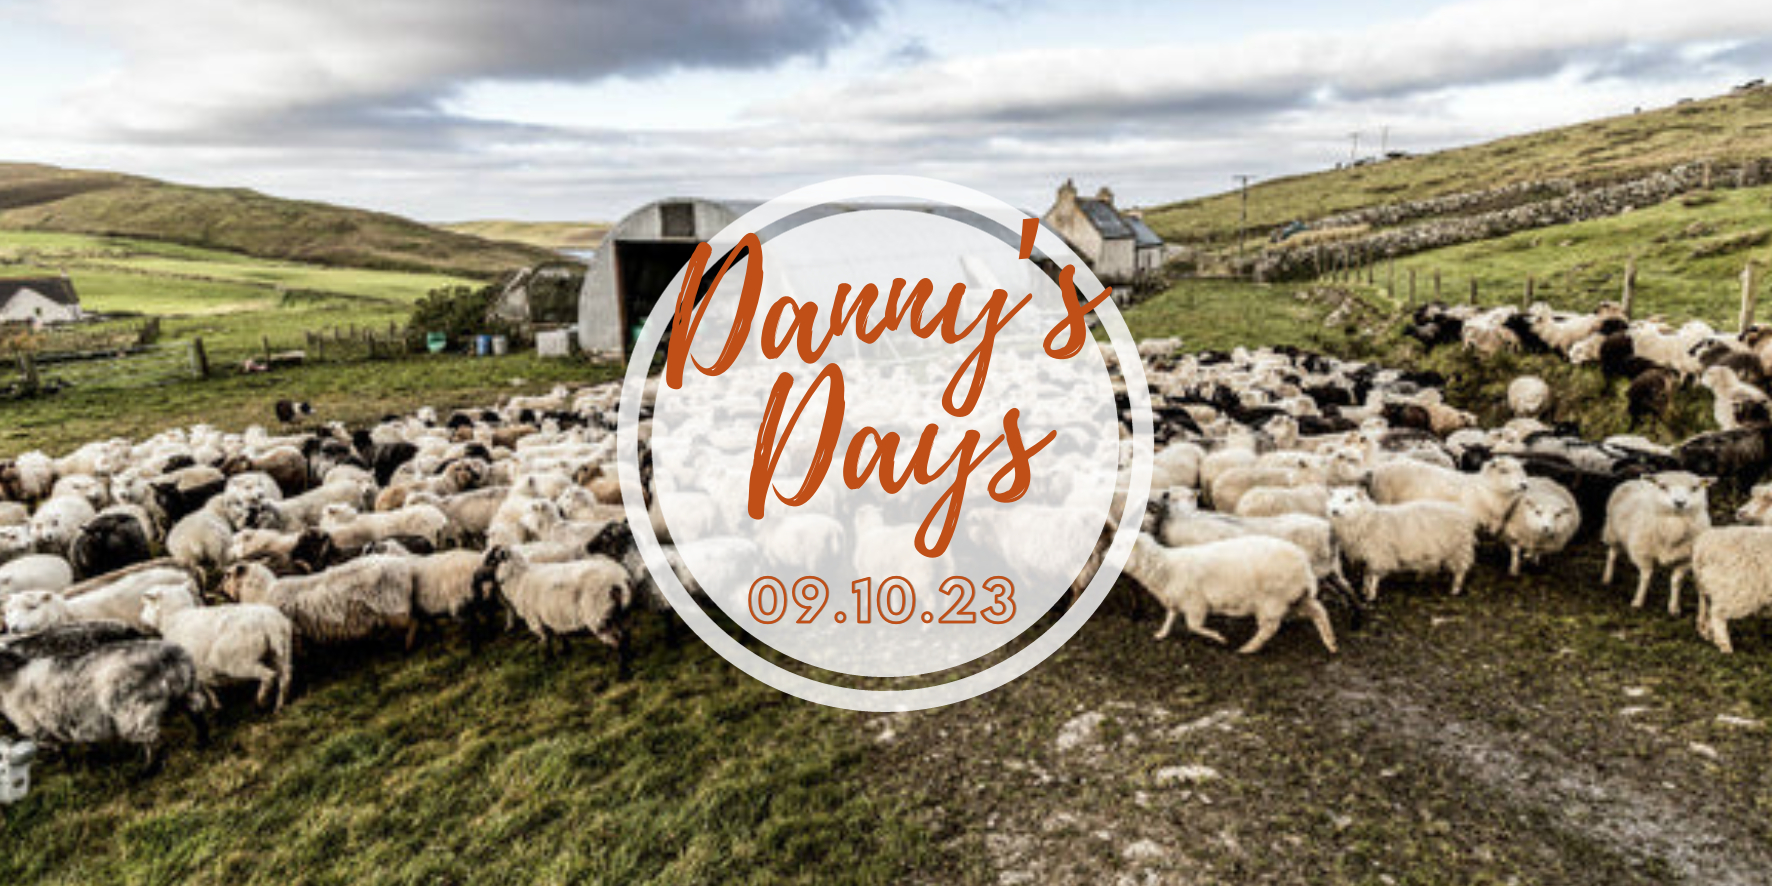 Danny's Days - 09.10.23 - Shetland Lamb